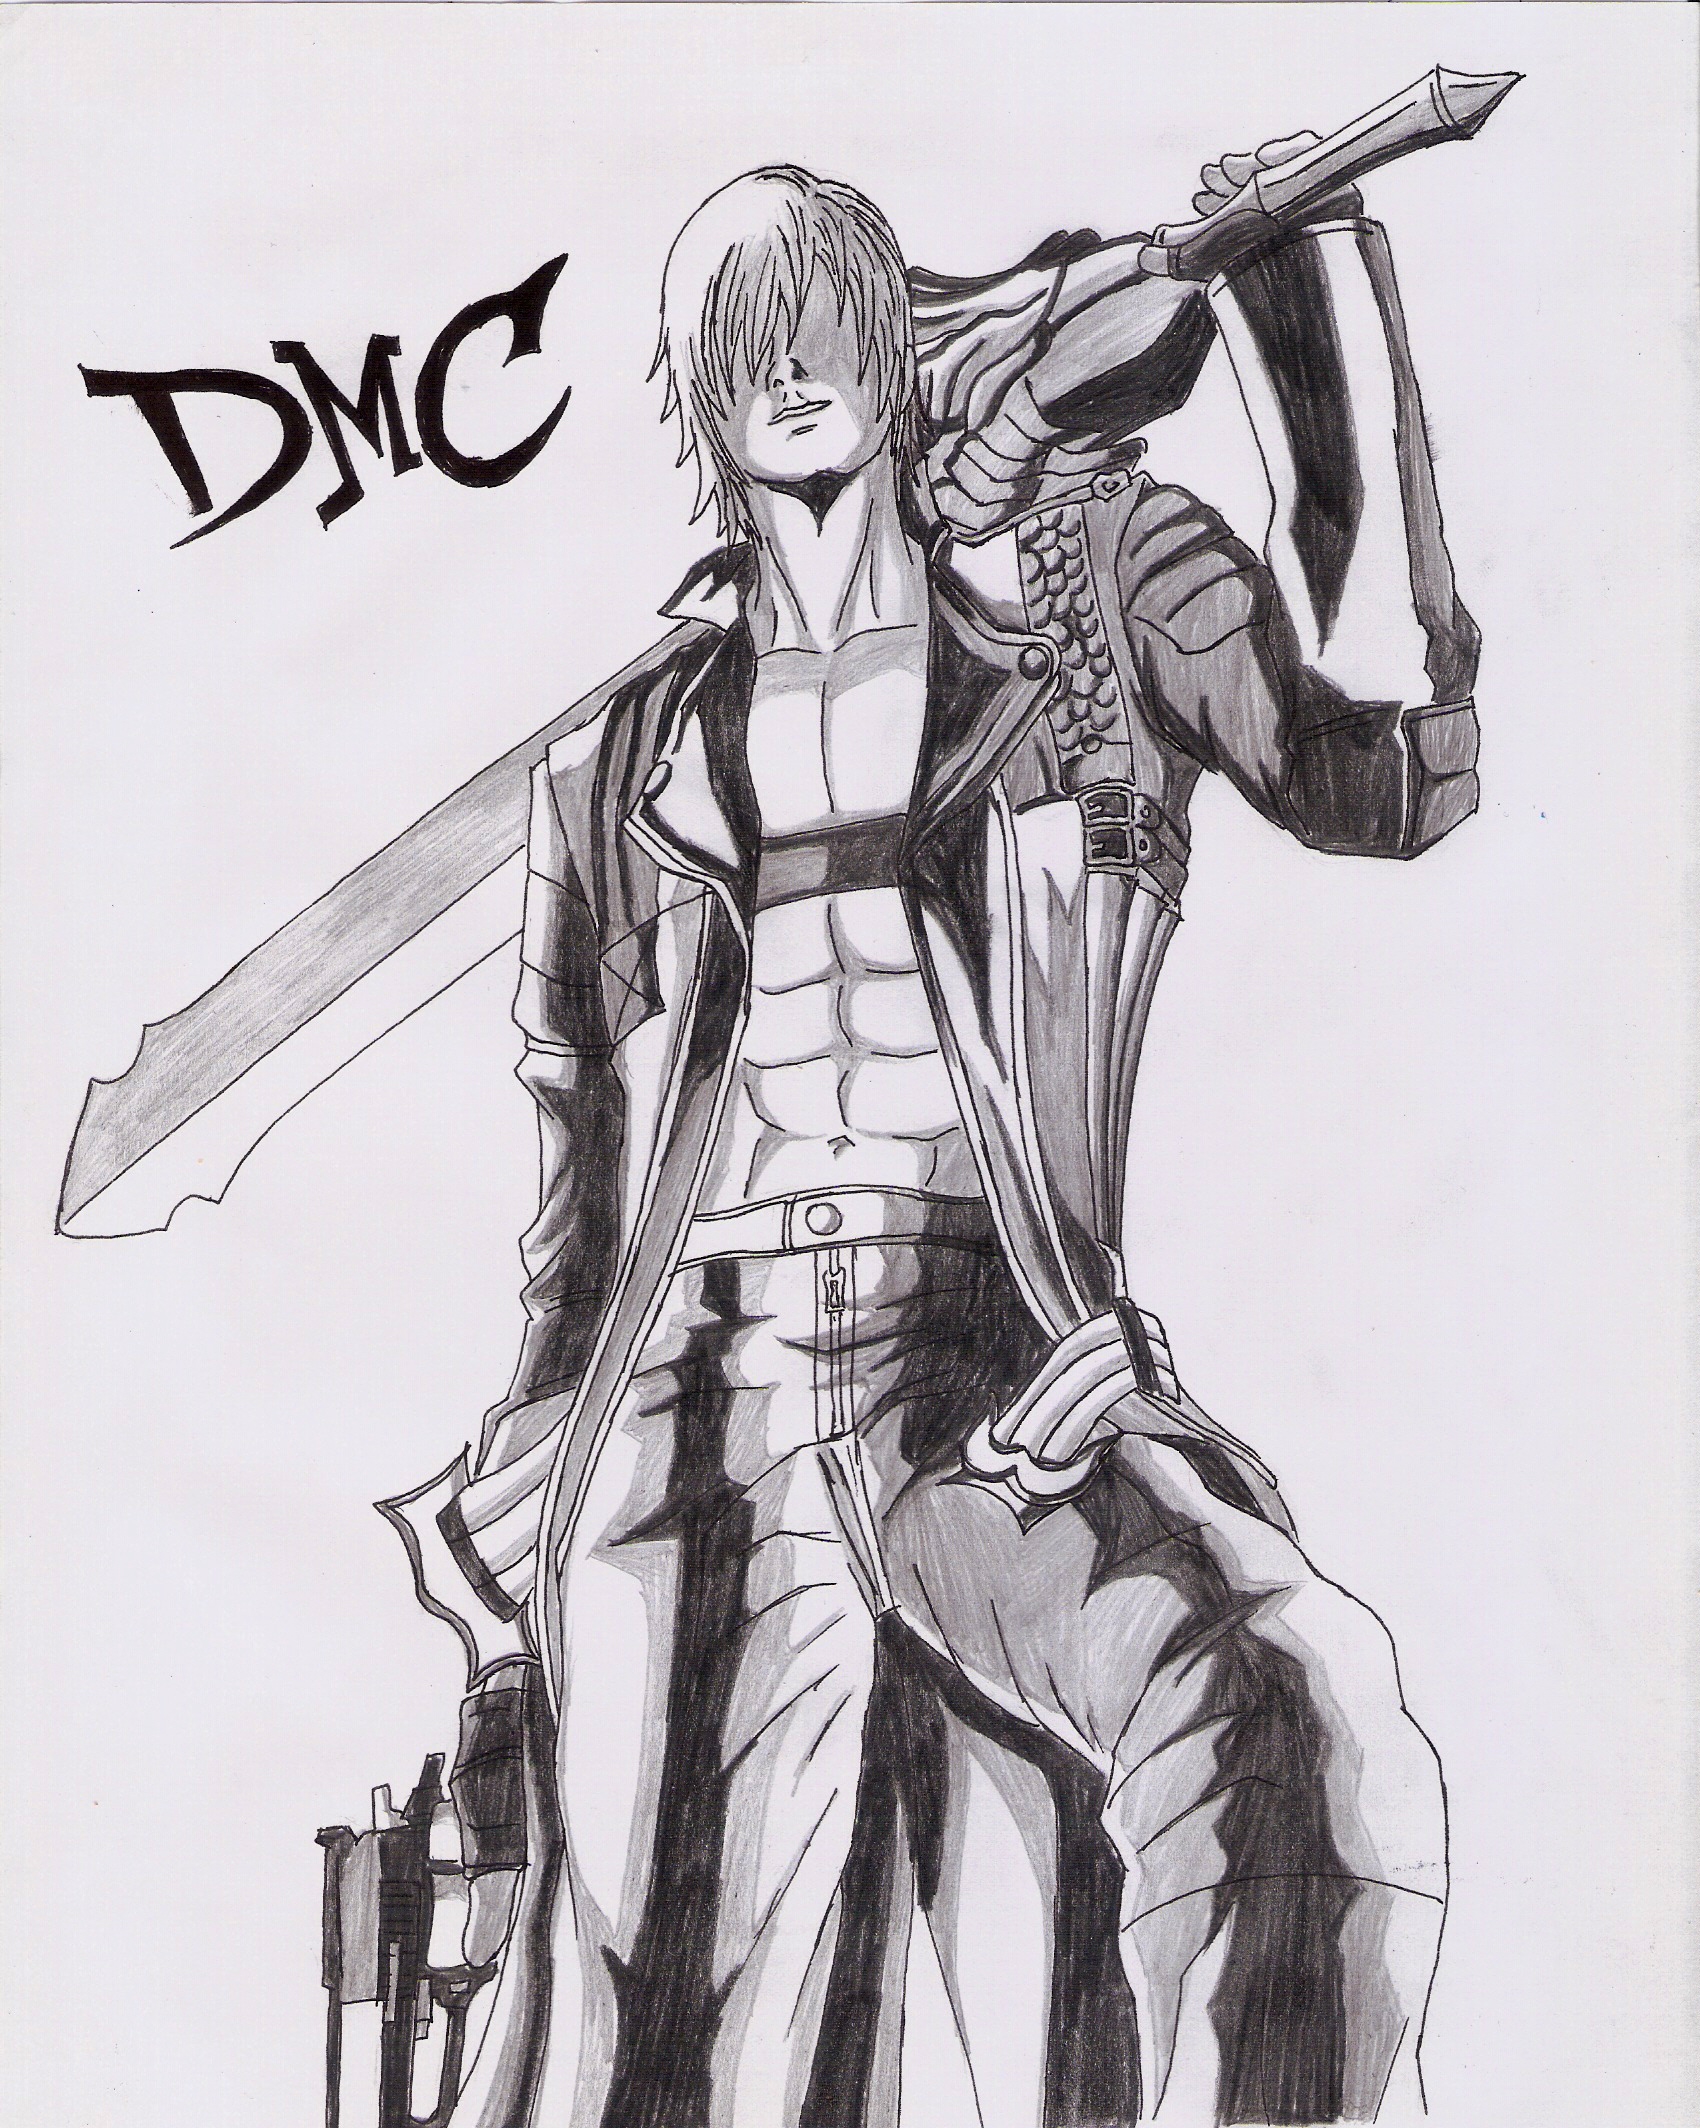 Данте рисунок. Dante DMC. Данте из Devil May Cry. Данте ДМС карандашом. Данте Devil May Cry рисунок карандашом.